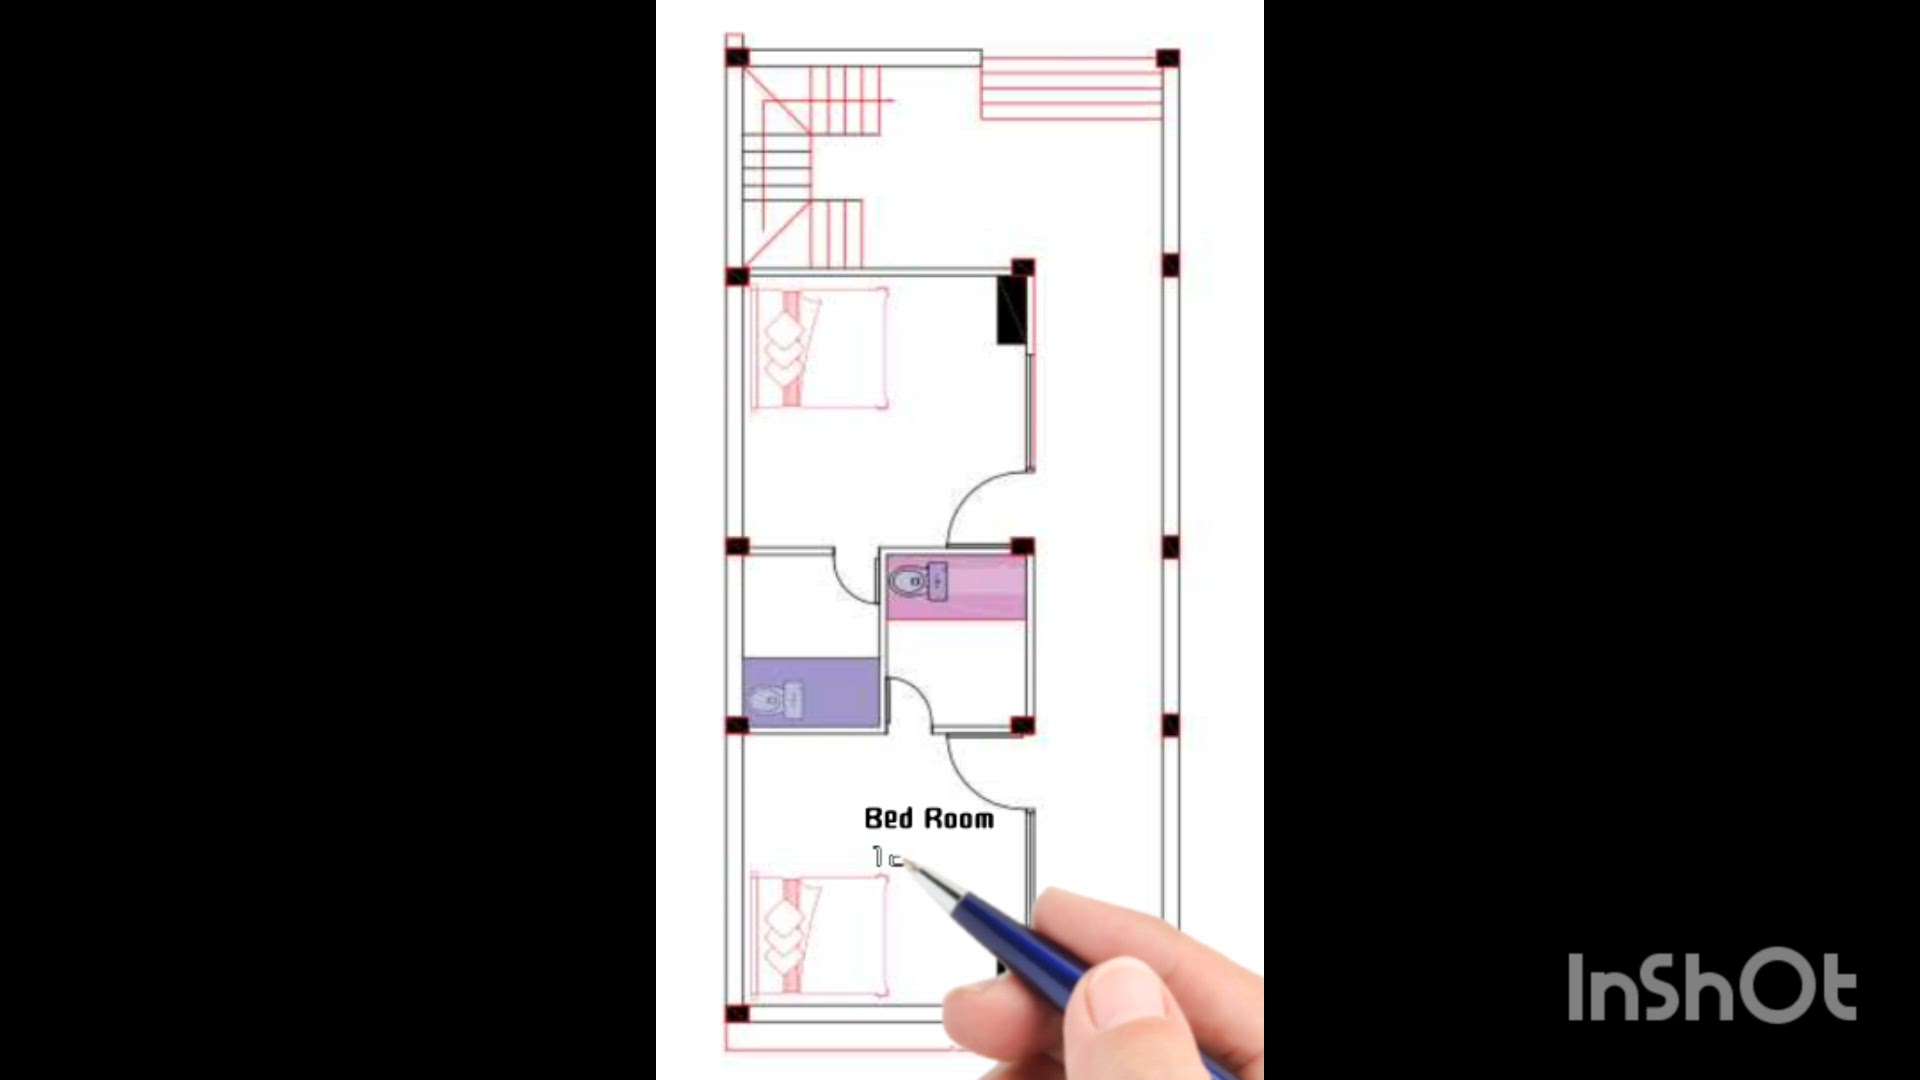 West Facing House plan Layout
#trandingdesign #HouseDesigns #FloorPlans #InteriorDesigner #LayoutDesigns